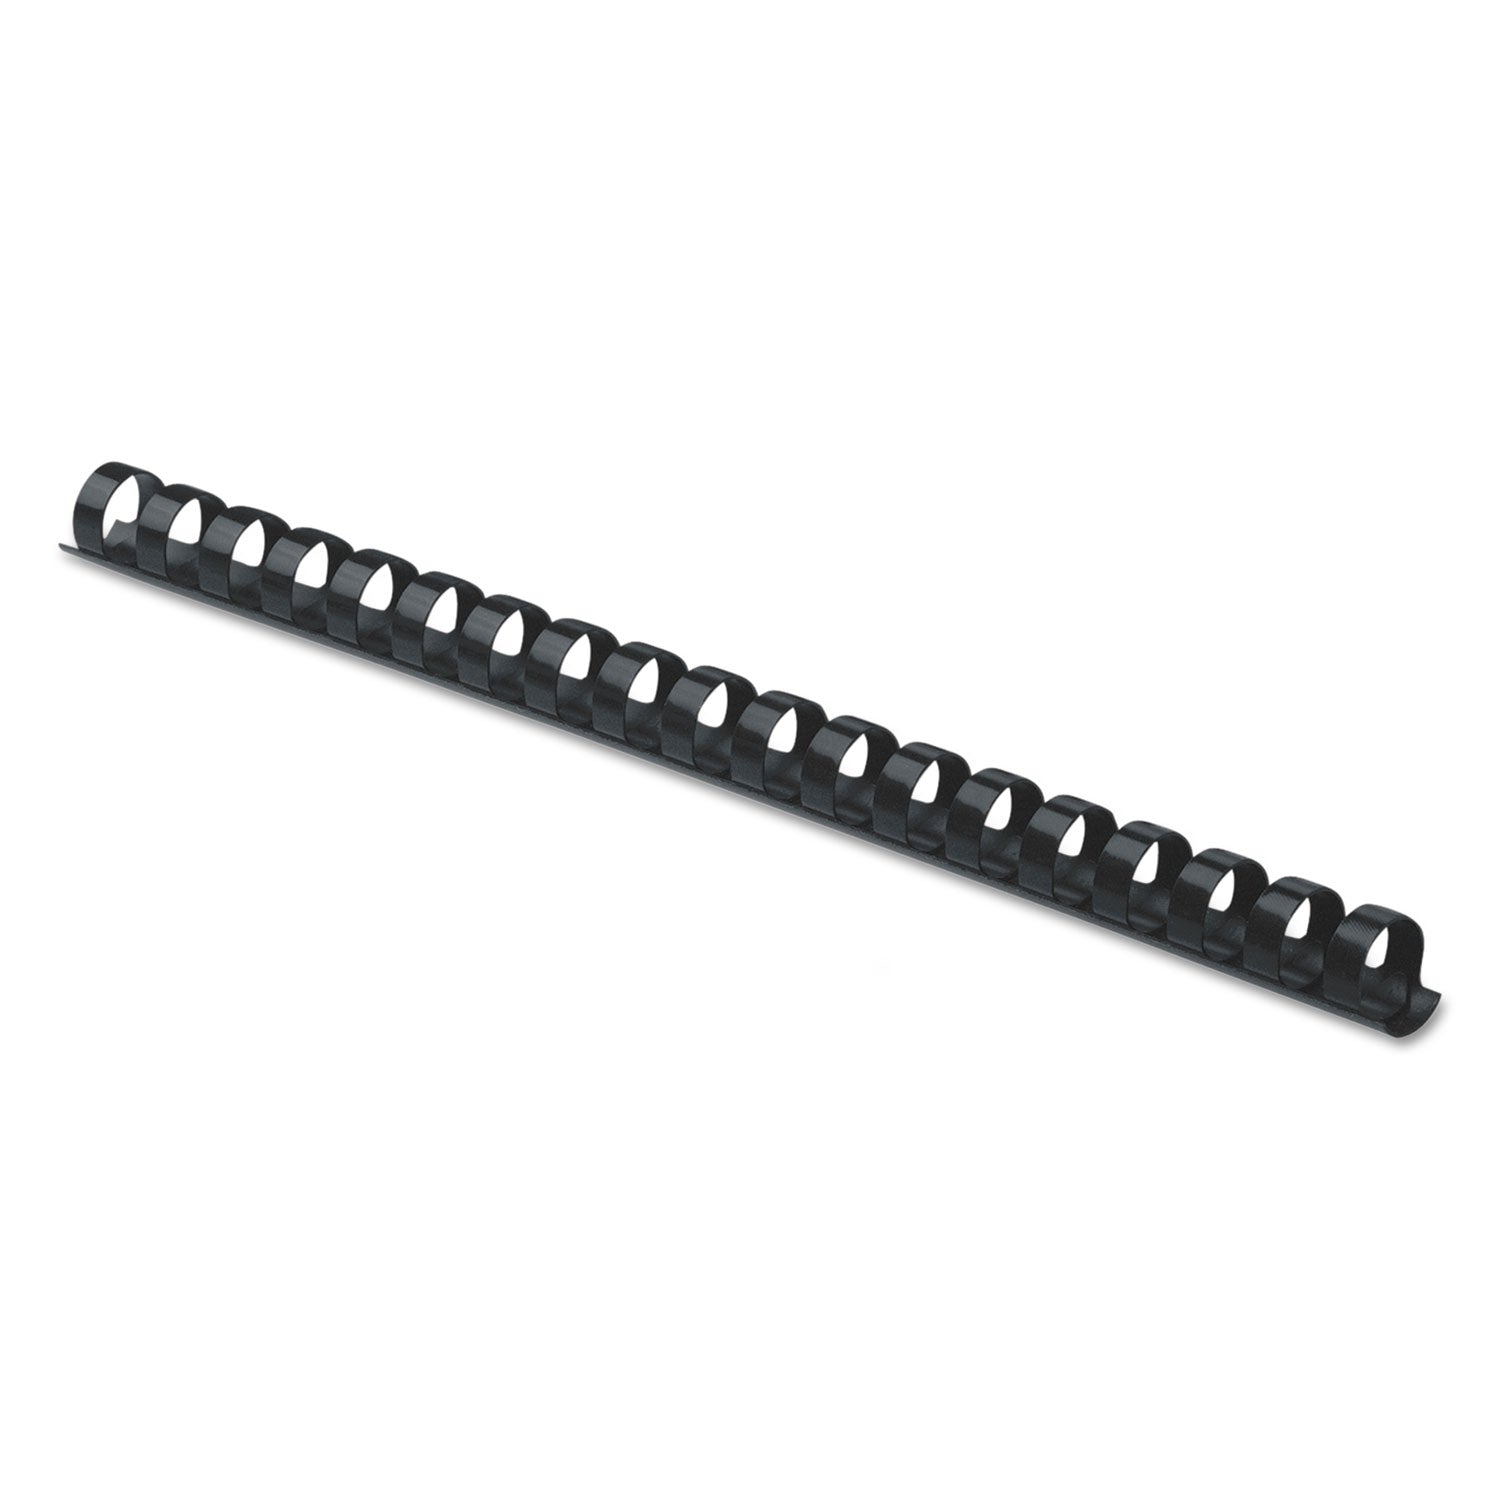 Plastic Comb Bindings, 3/8" Diameter, 55 Sheet Capacity, Navy Blue, 100/Pack - 